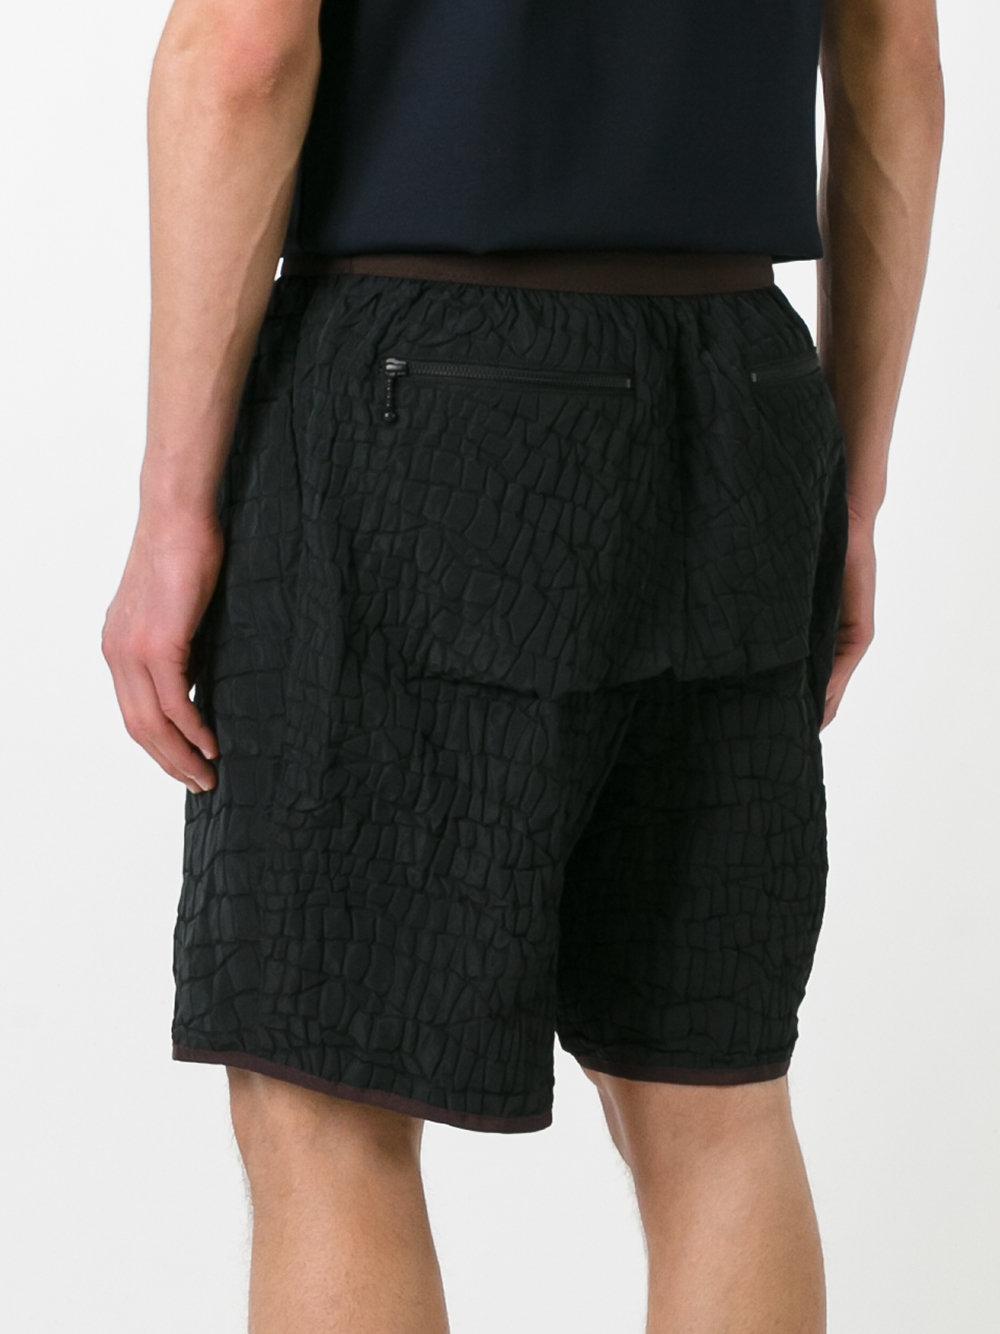 Lyst - Kolor Crocodile Embossed Effect Shorts in Black for Men